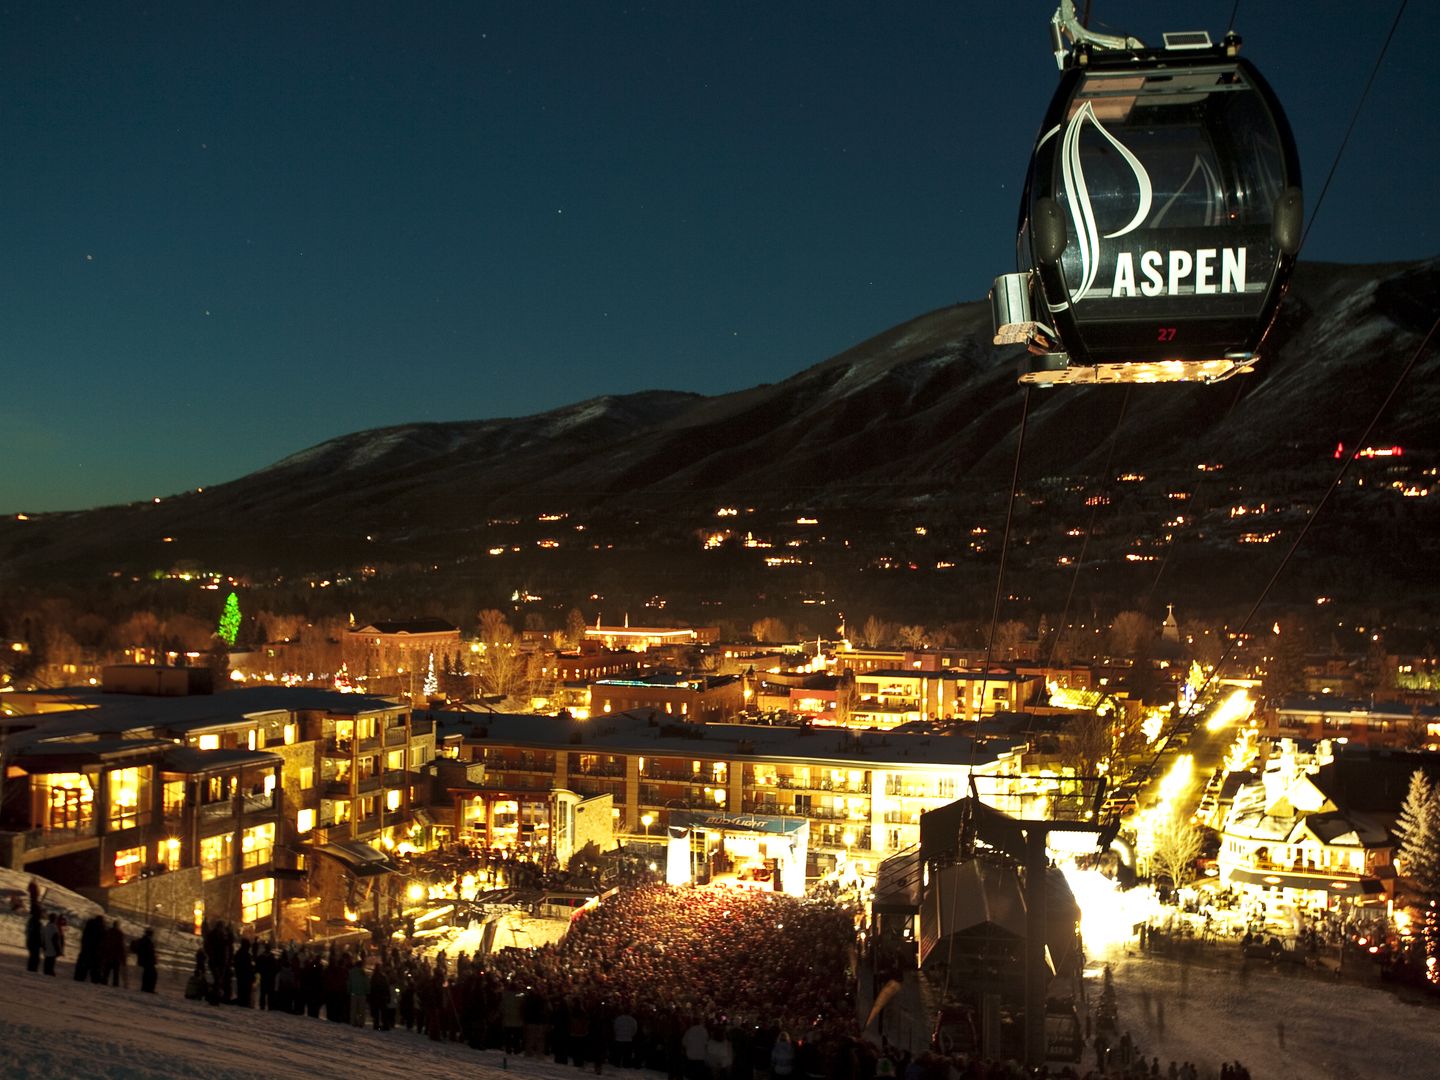 Fotos: Aspen Skiing Company